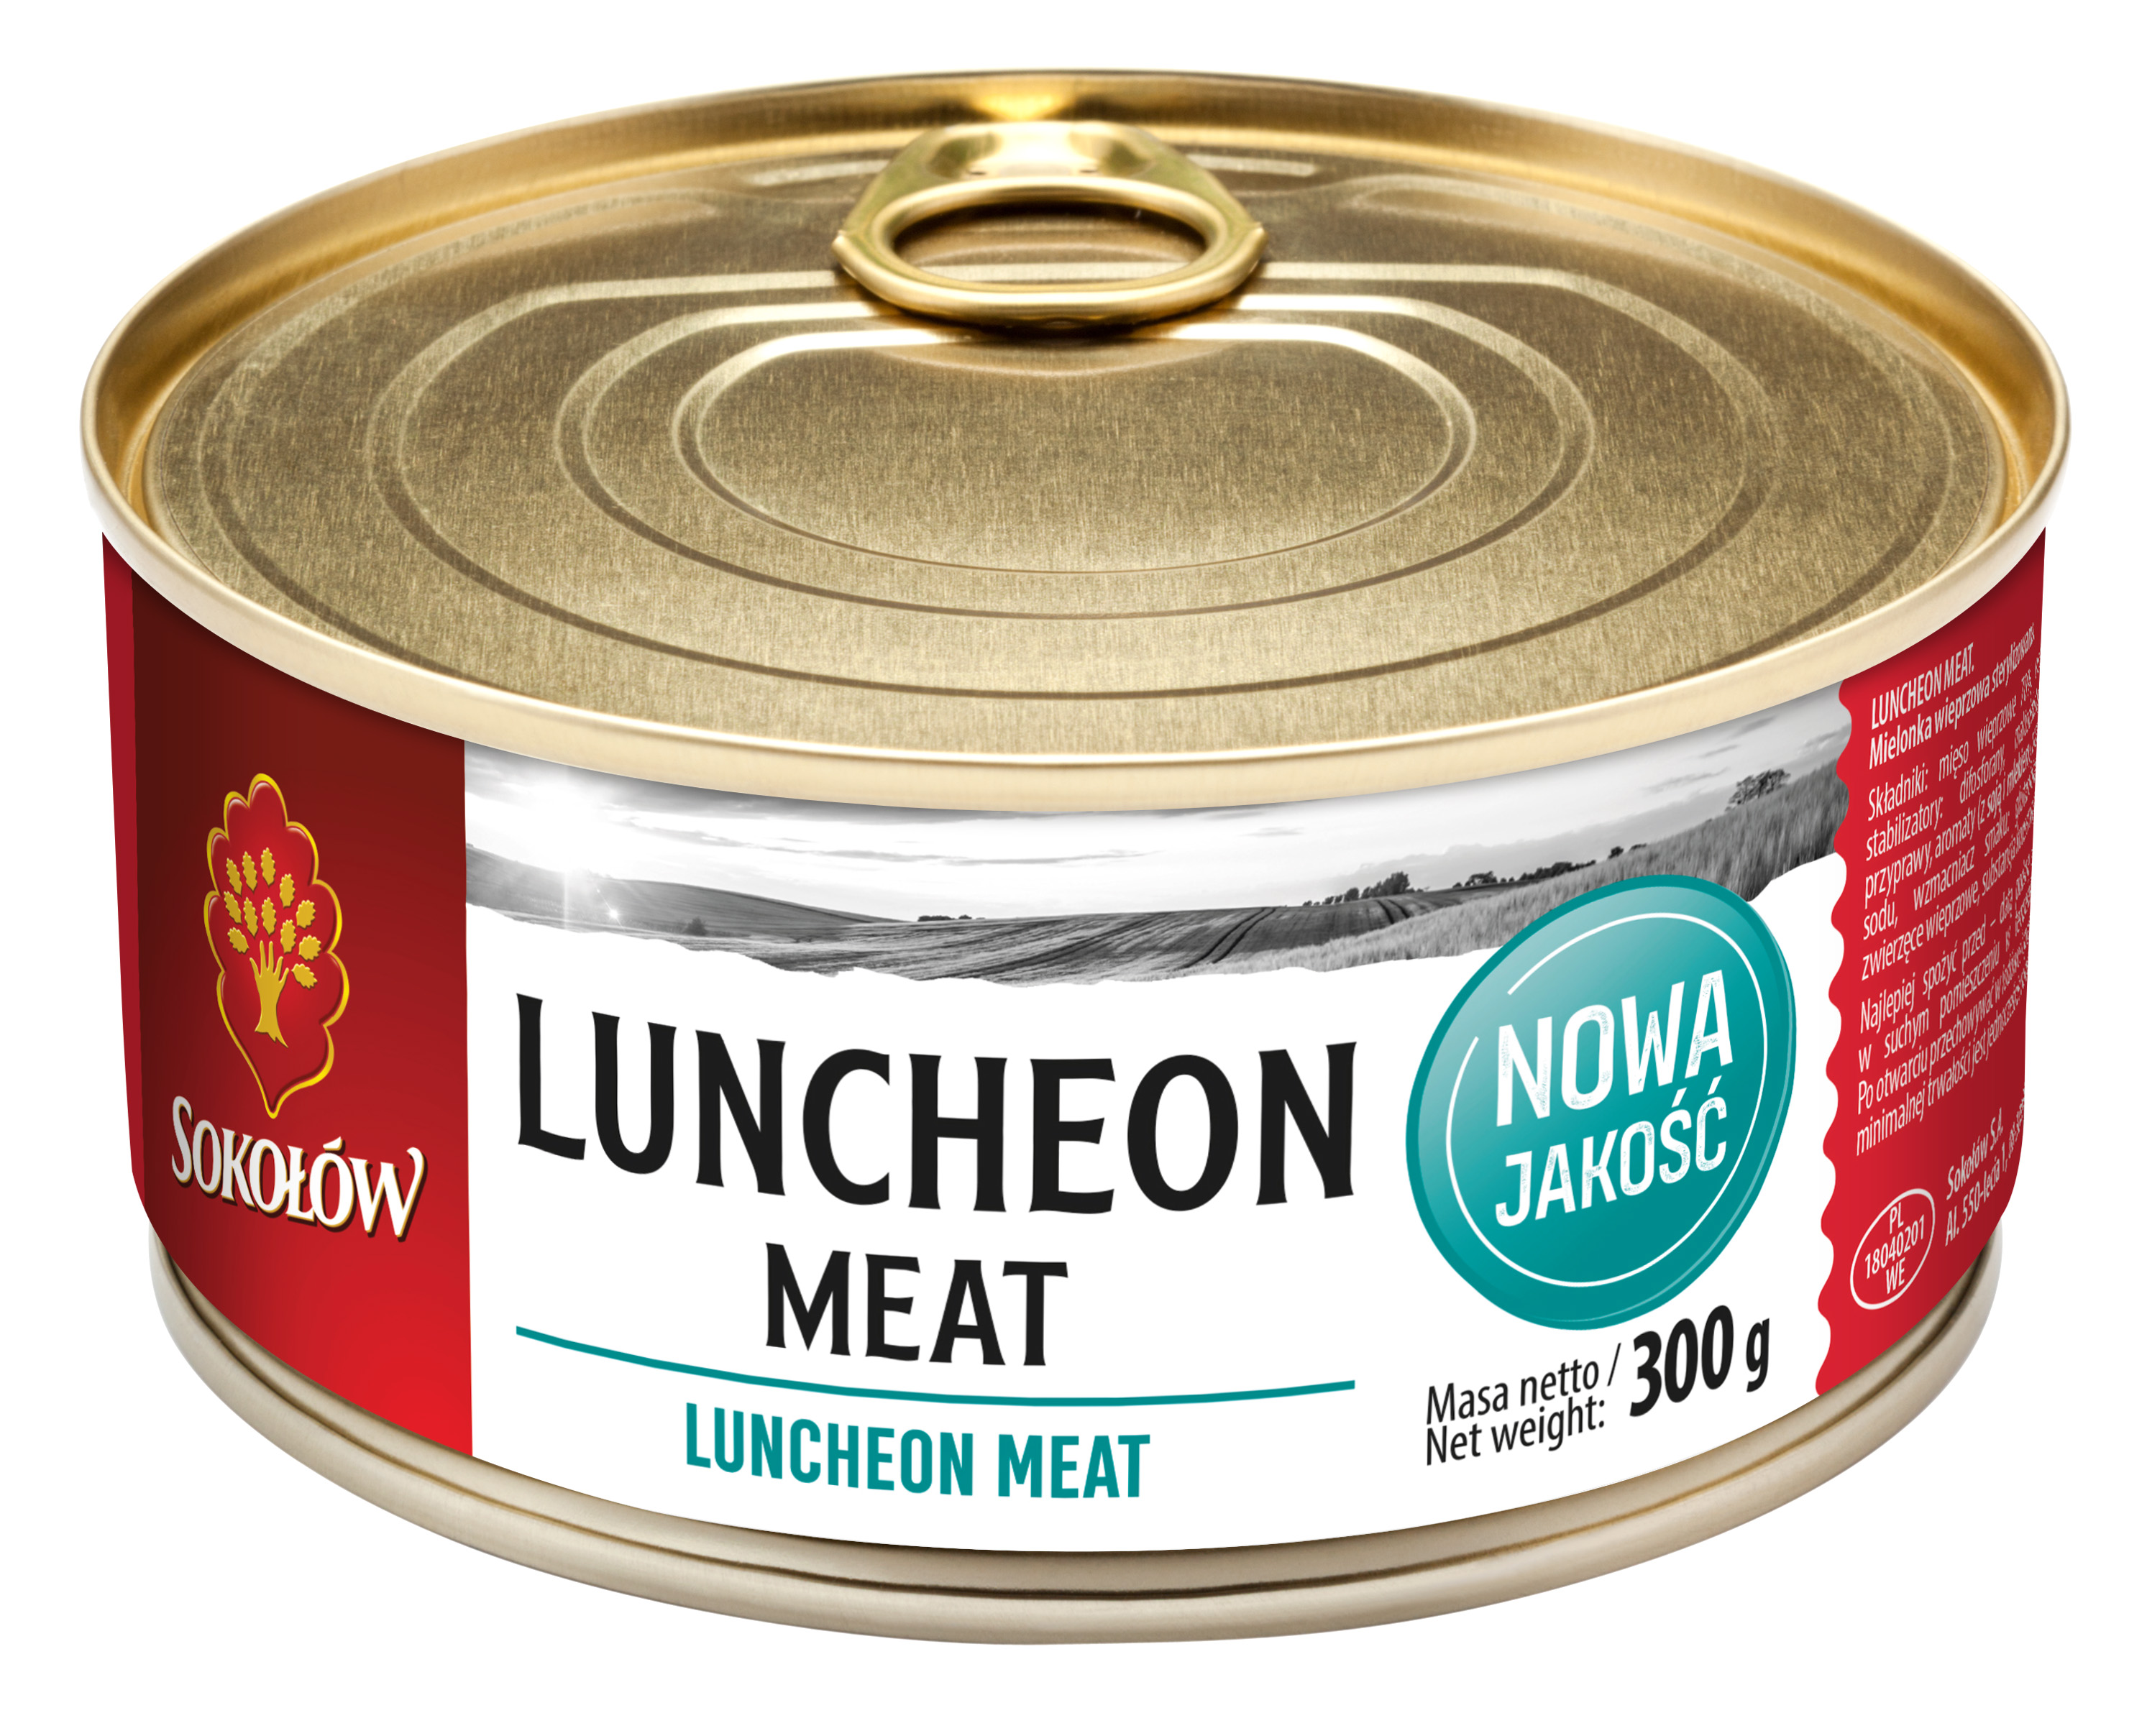 Sokołów Canned Luncheon Meat